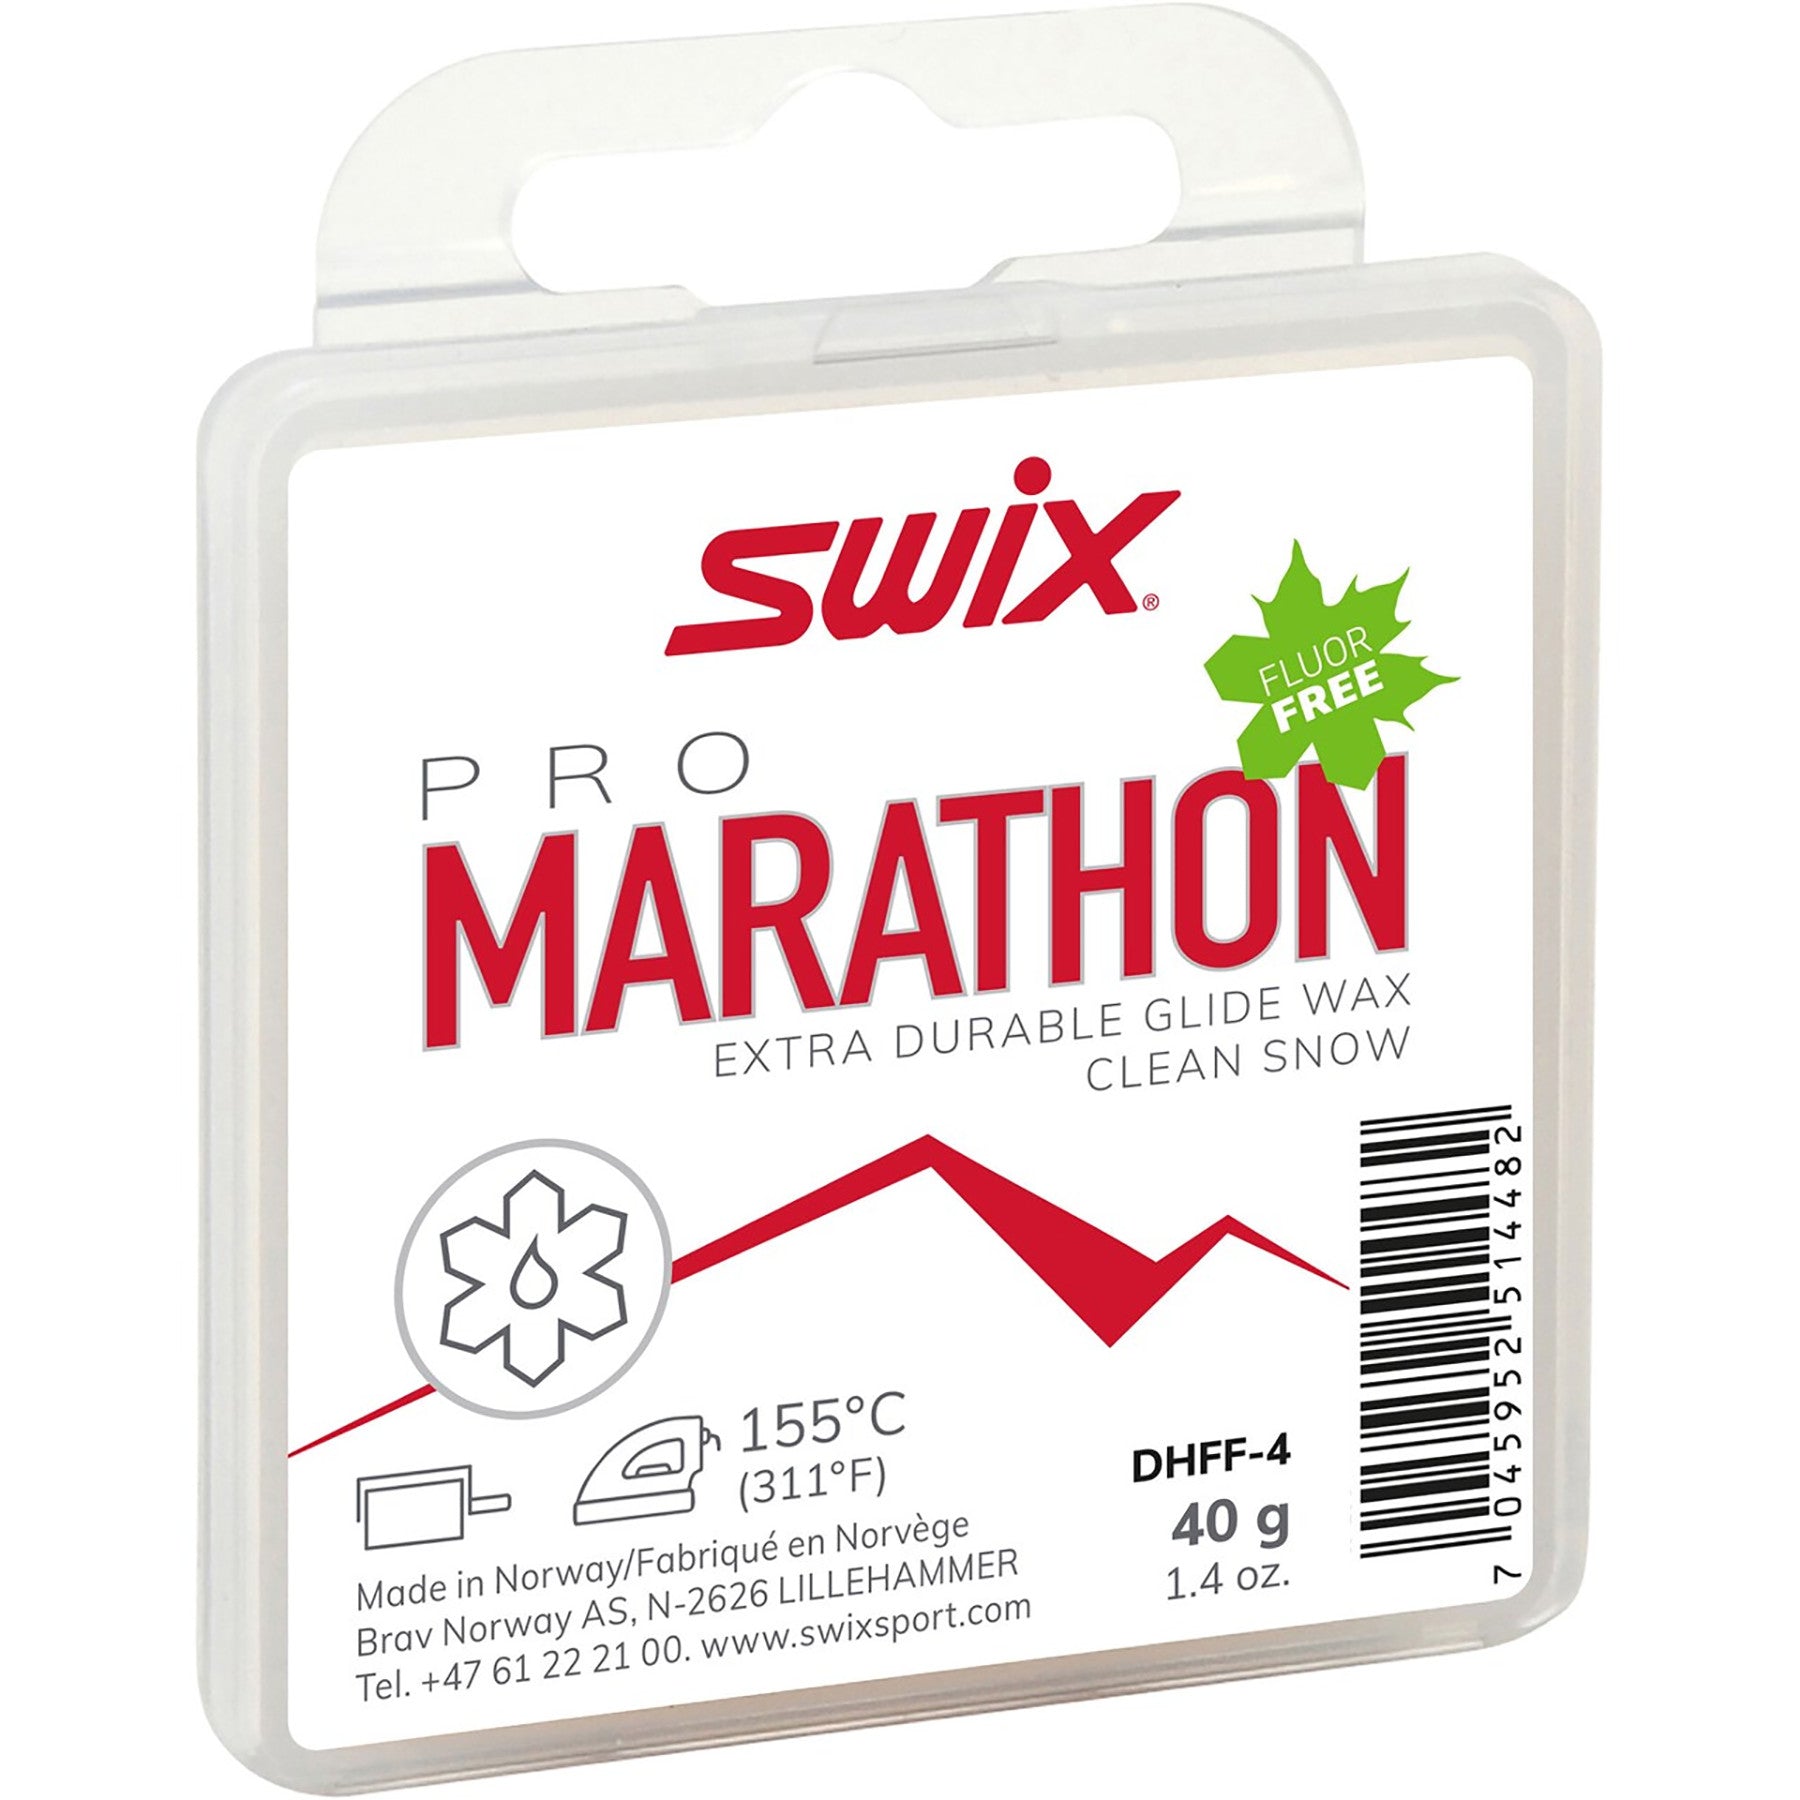 Buy white Swix Marathon Fluoro Free 40g